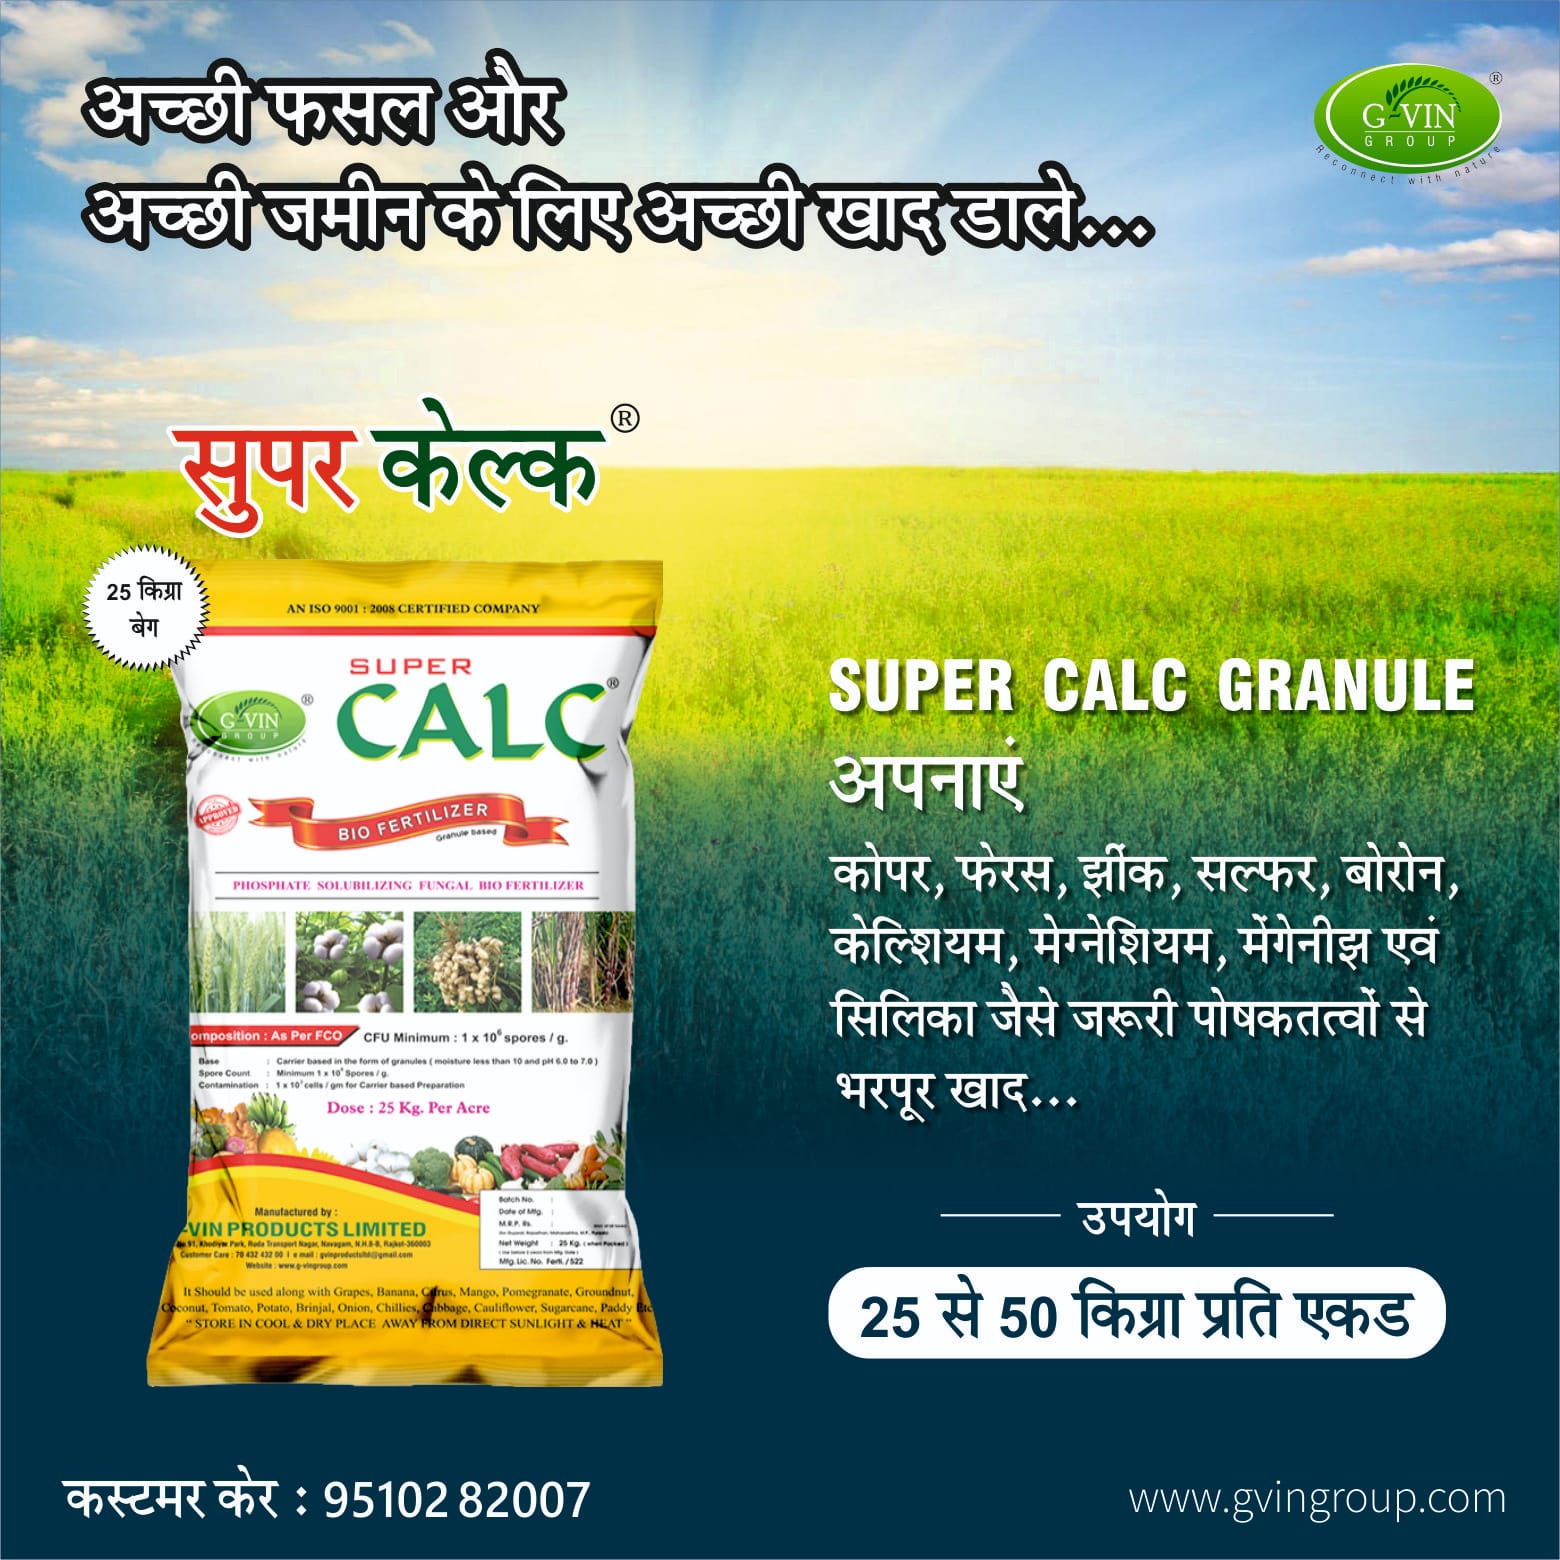 Supercalc is Bio Fertilizer